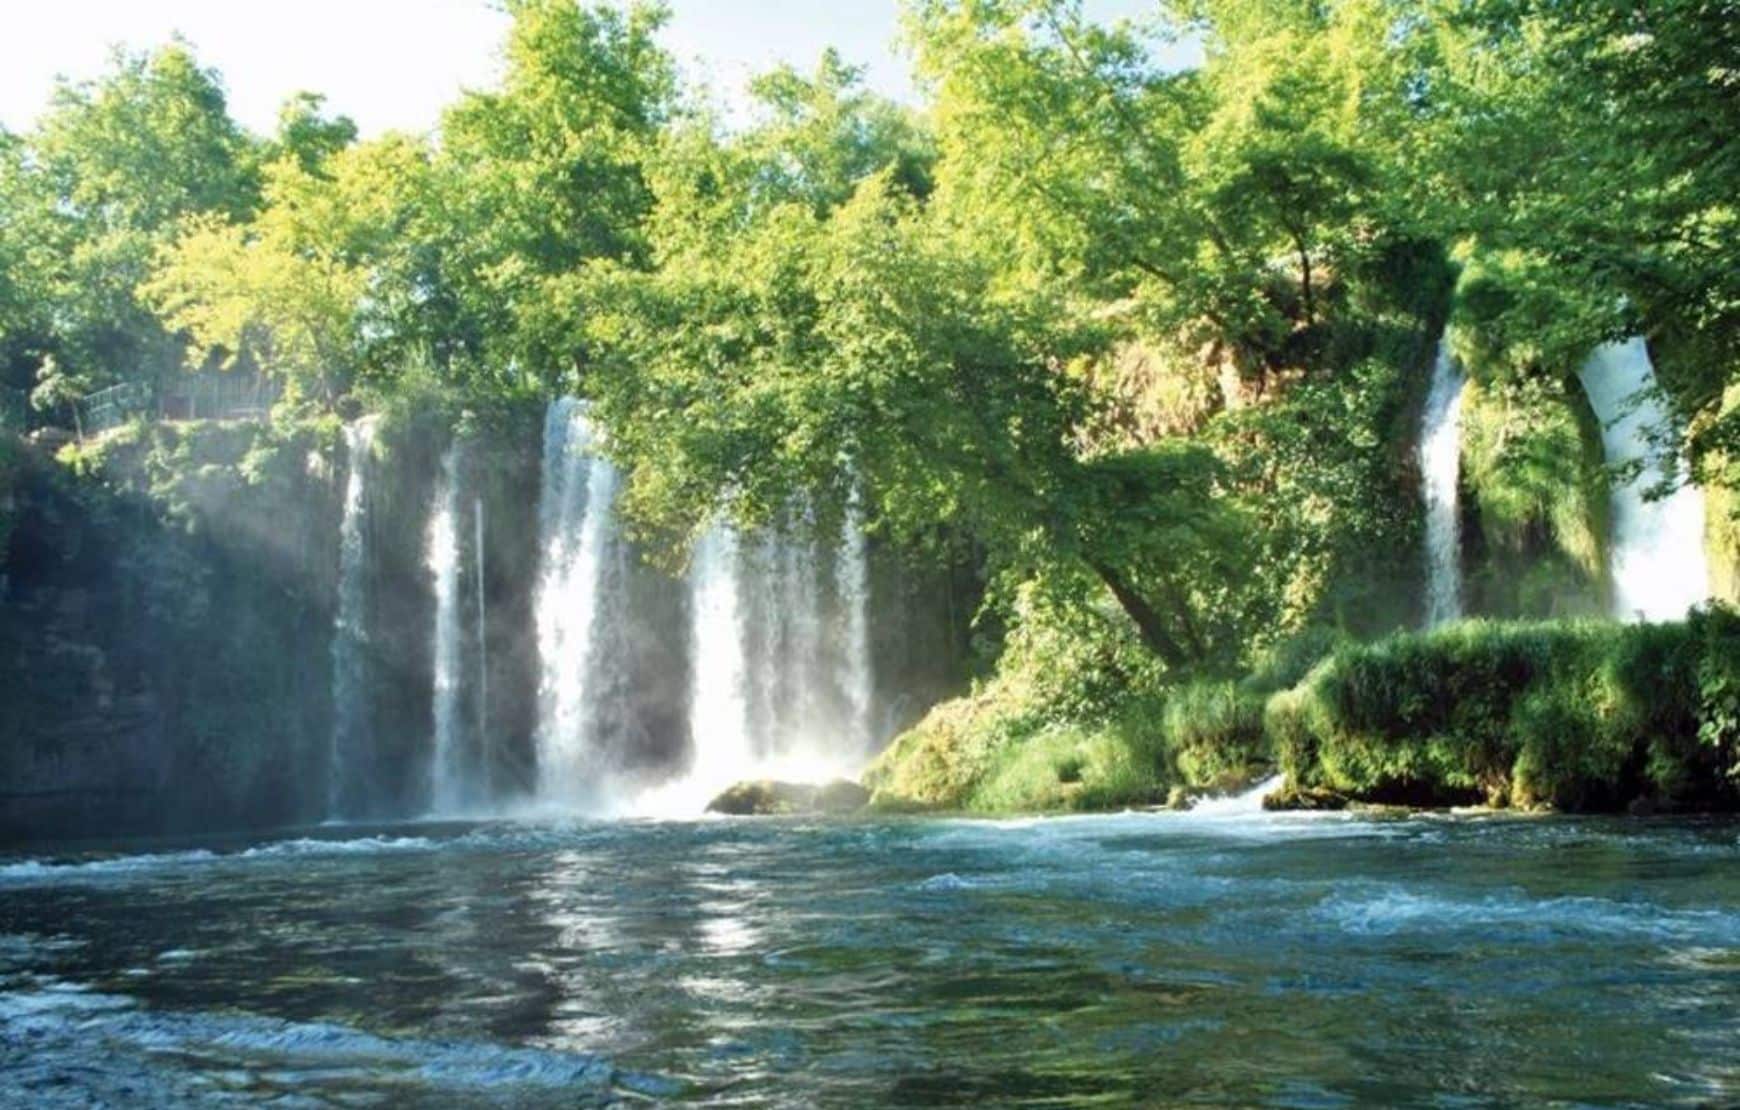 Duden Waterfall in Antalya